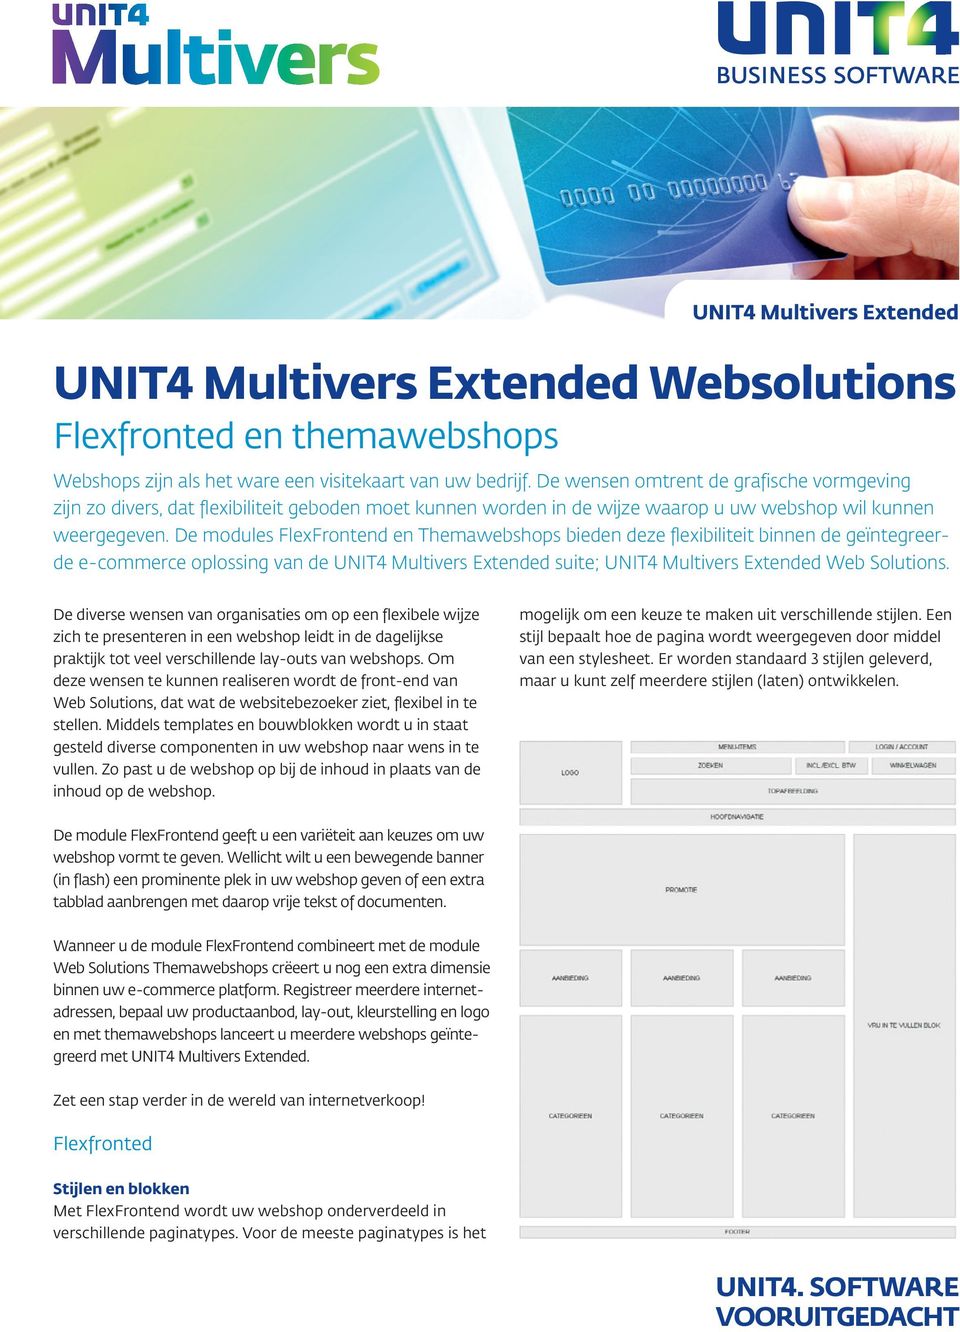 De modules FlexFrontend en Themawebshops bieden deze flexibiliteit binnen de geïntegreerde e-commerce oplossing van de UNIT4 Multivers Extended suite; UNIT4 Multivers Extended Web Solutions.